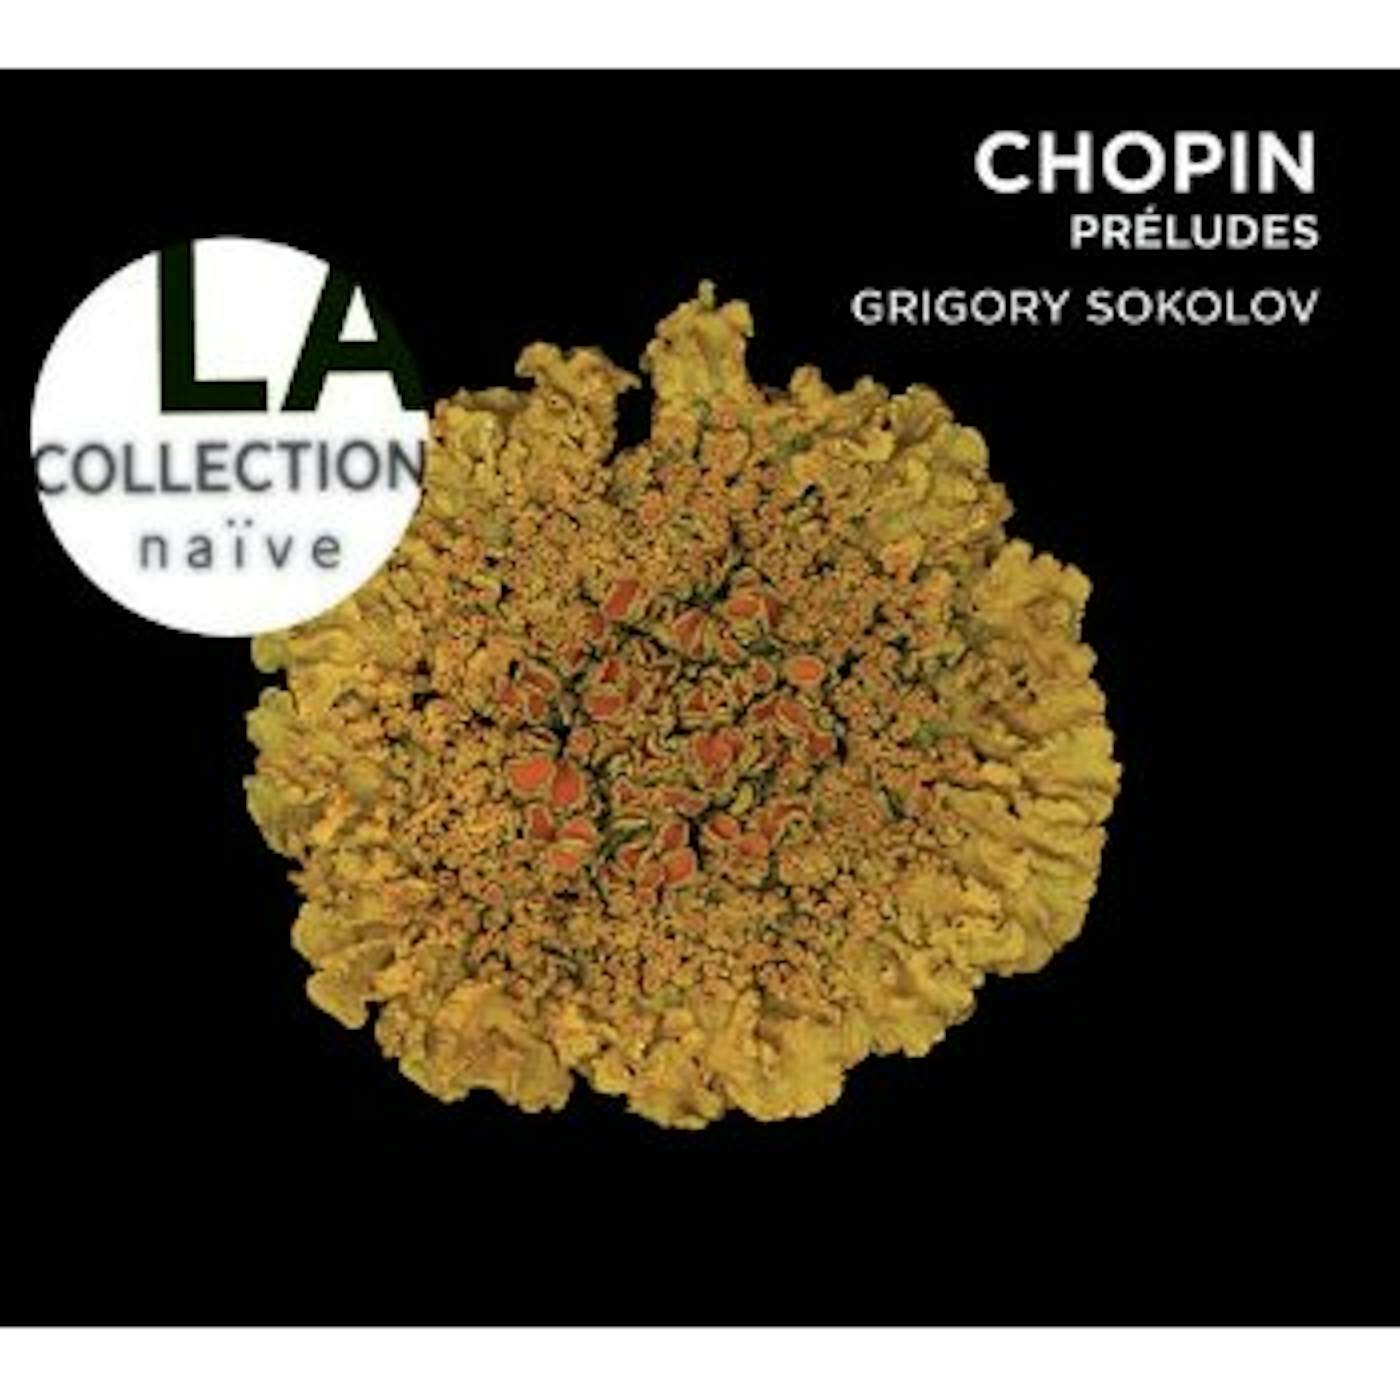 Chopin / Grigory Sokolov PRELUDES CD